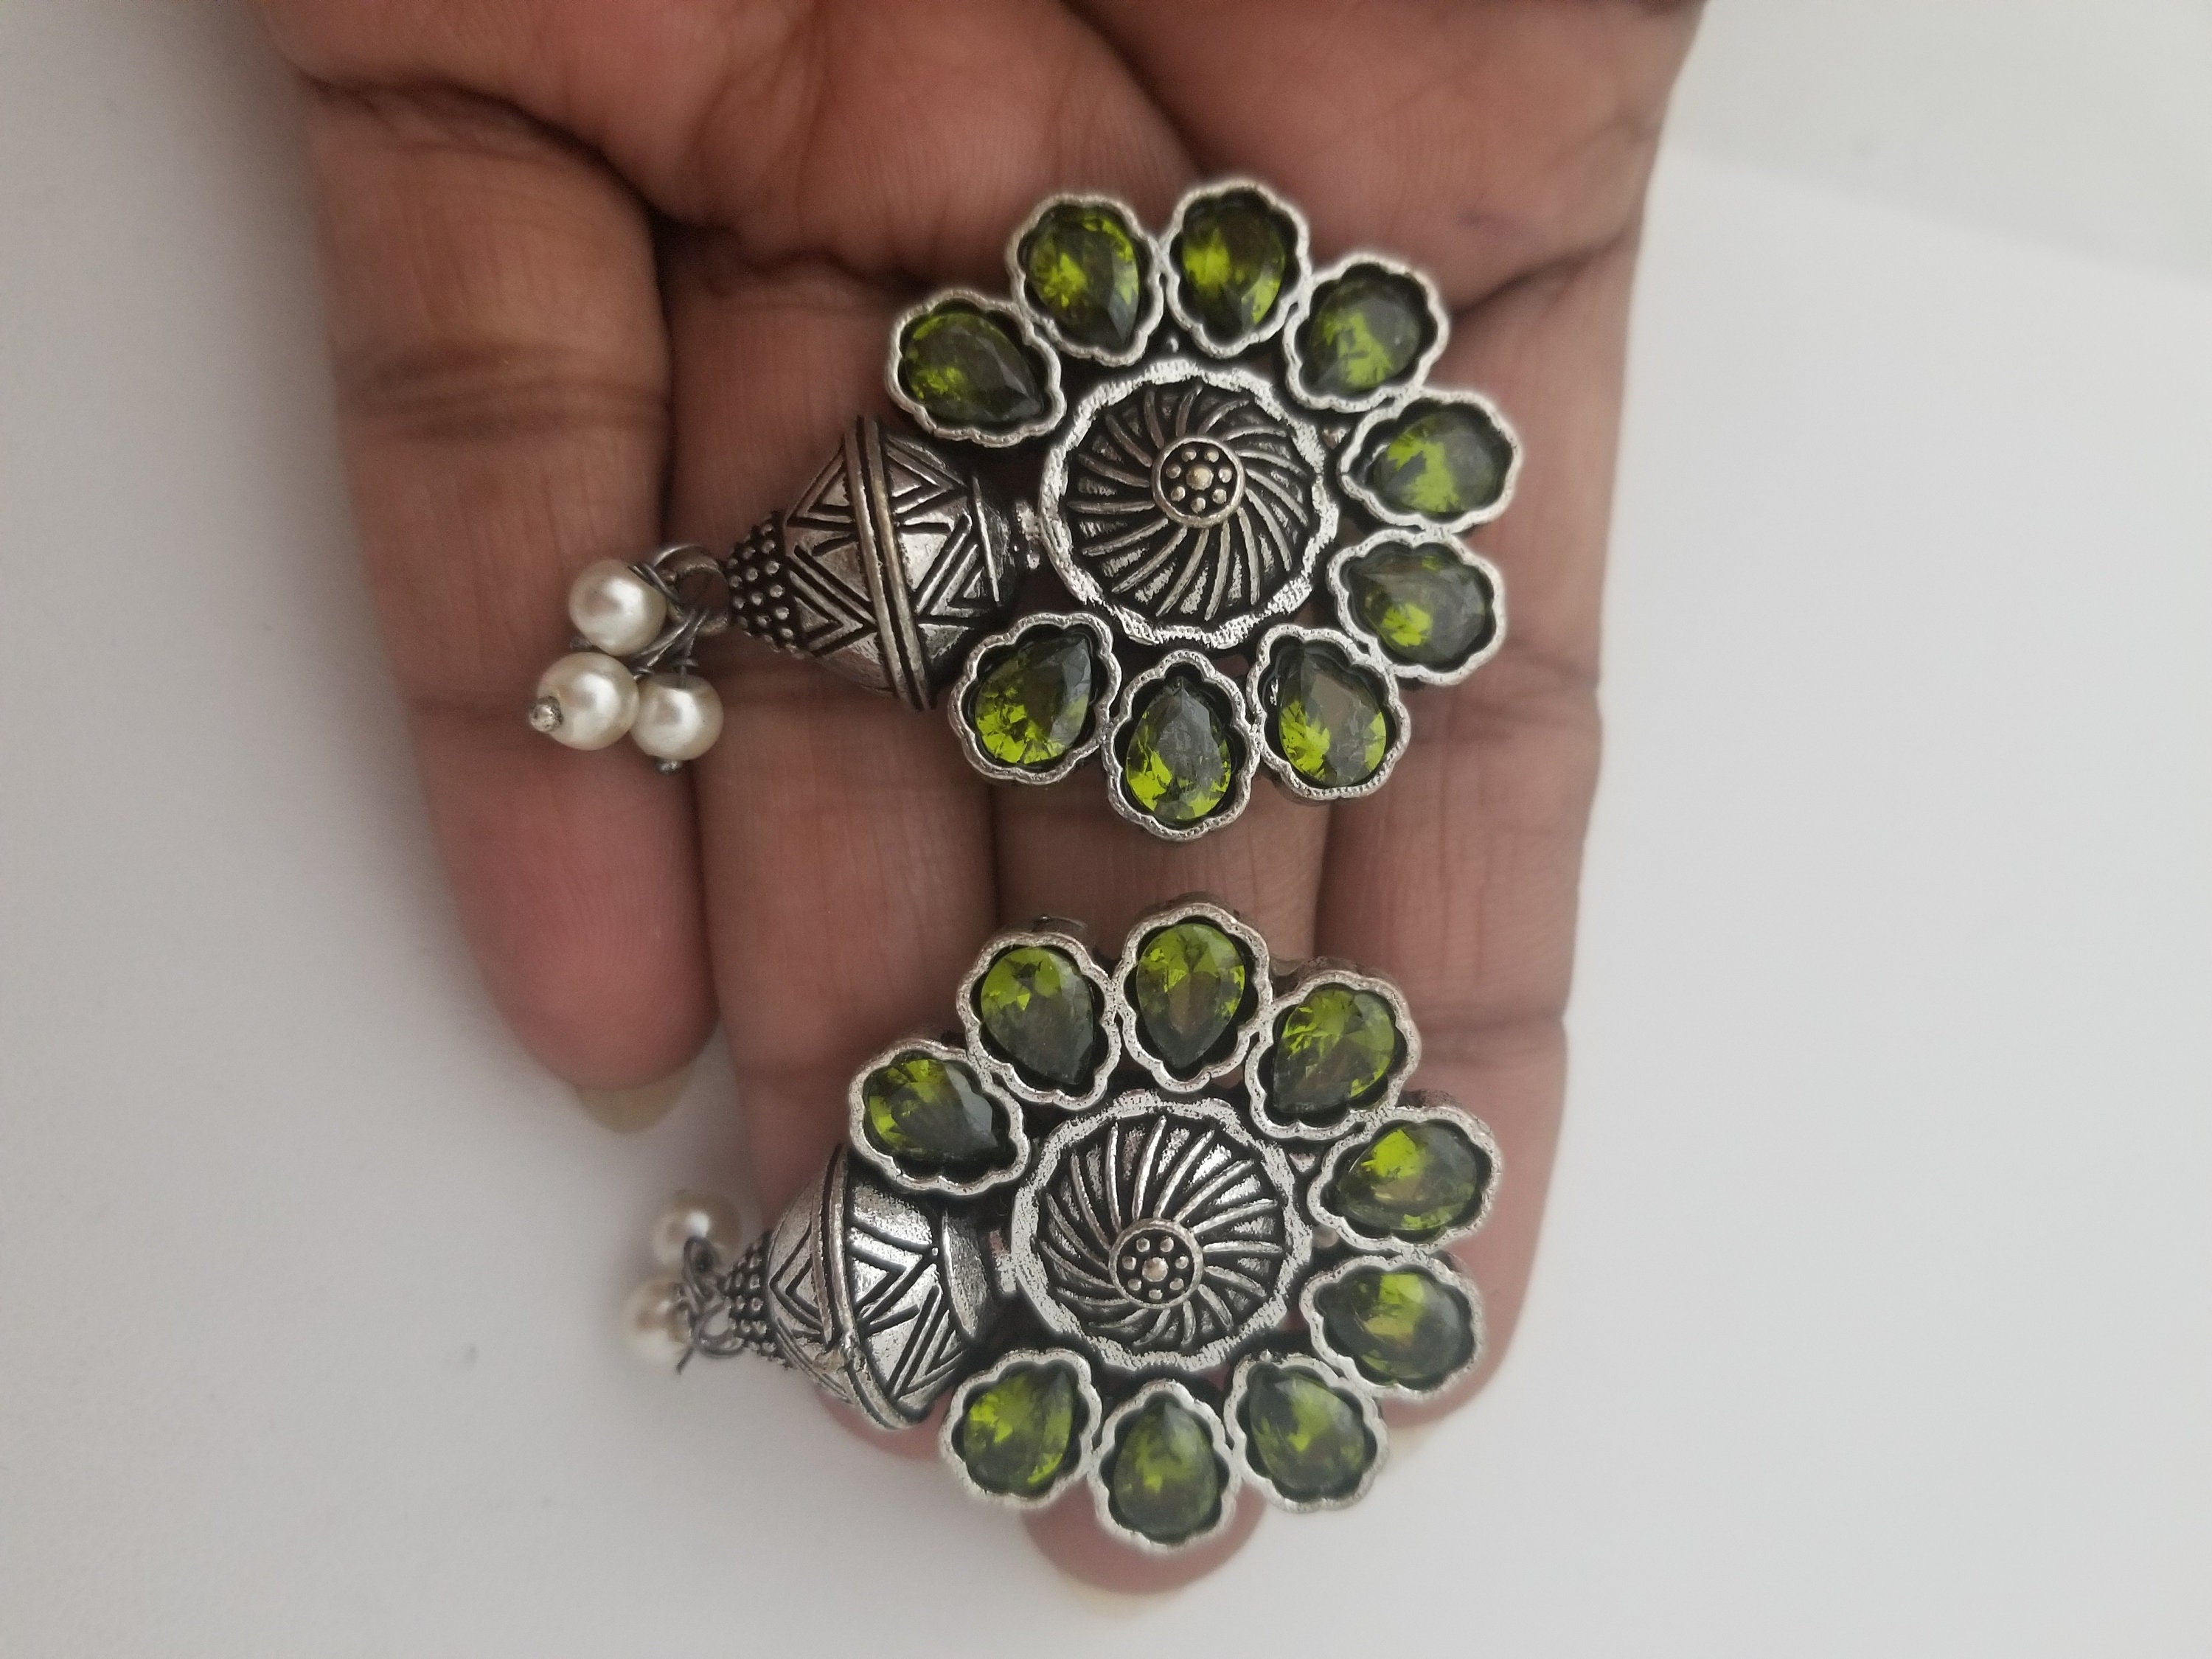 Oxidized Green stones Earrings Jhumki Jhumka for Women and Girls